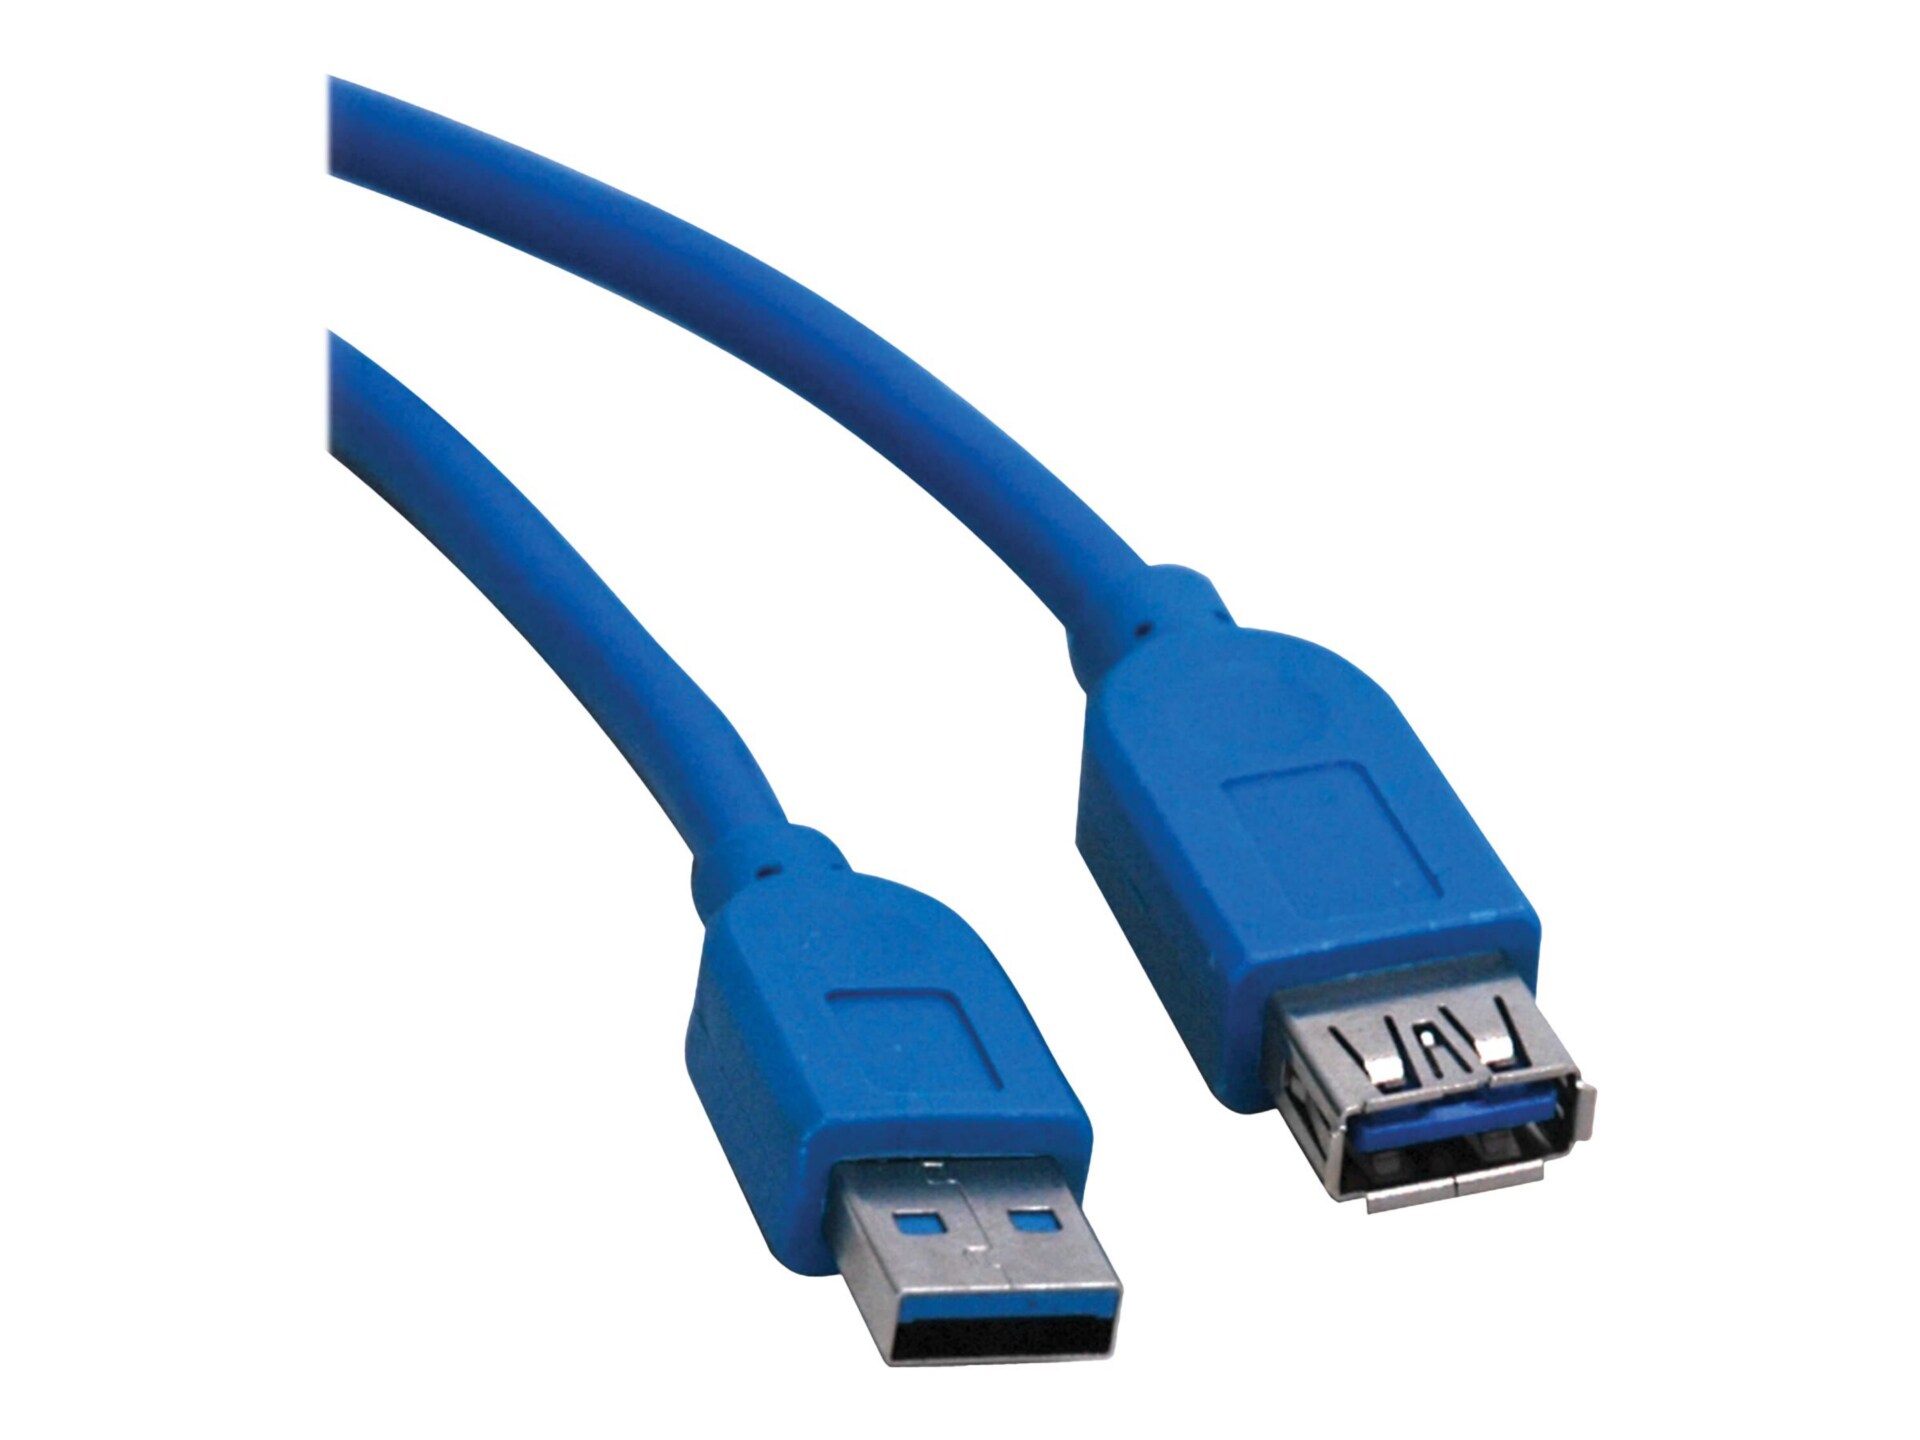 Câble d’extension USB Tripp Lite, USB 3.0 USB-A USB-A SuperSpeed M/F, bleu, 16 pi